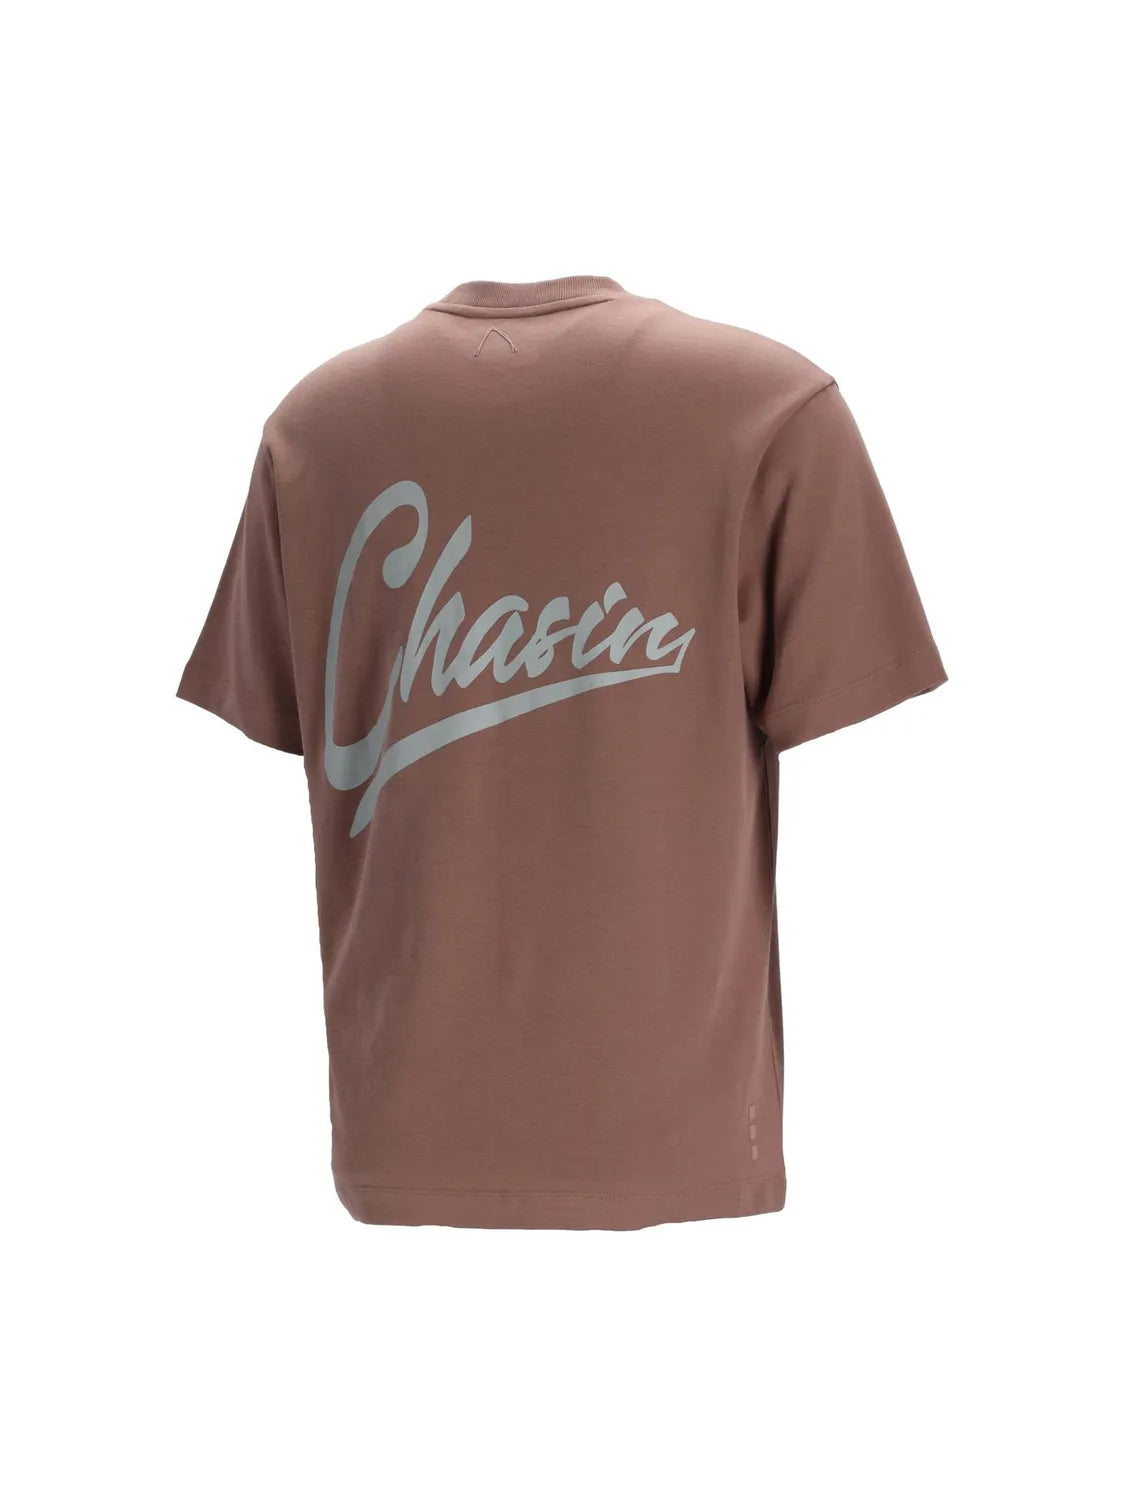 CHASIN | Spray T-Shirt | E46 DK.PINK